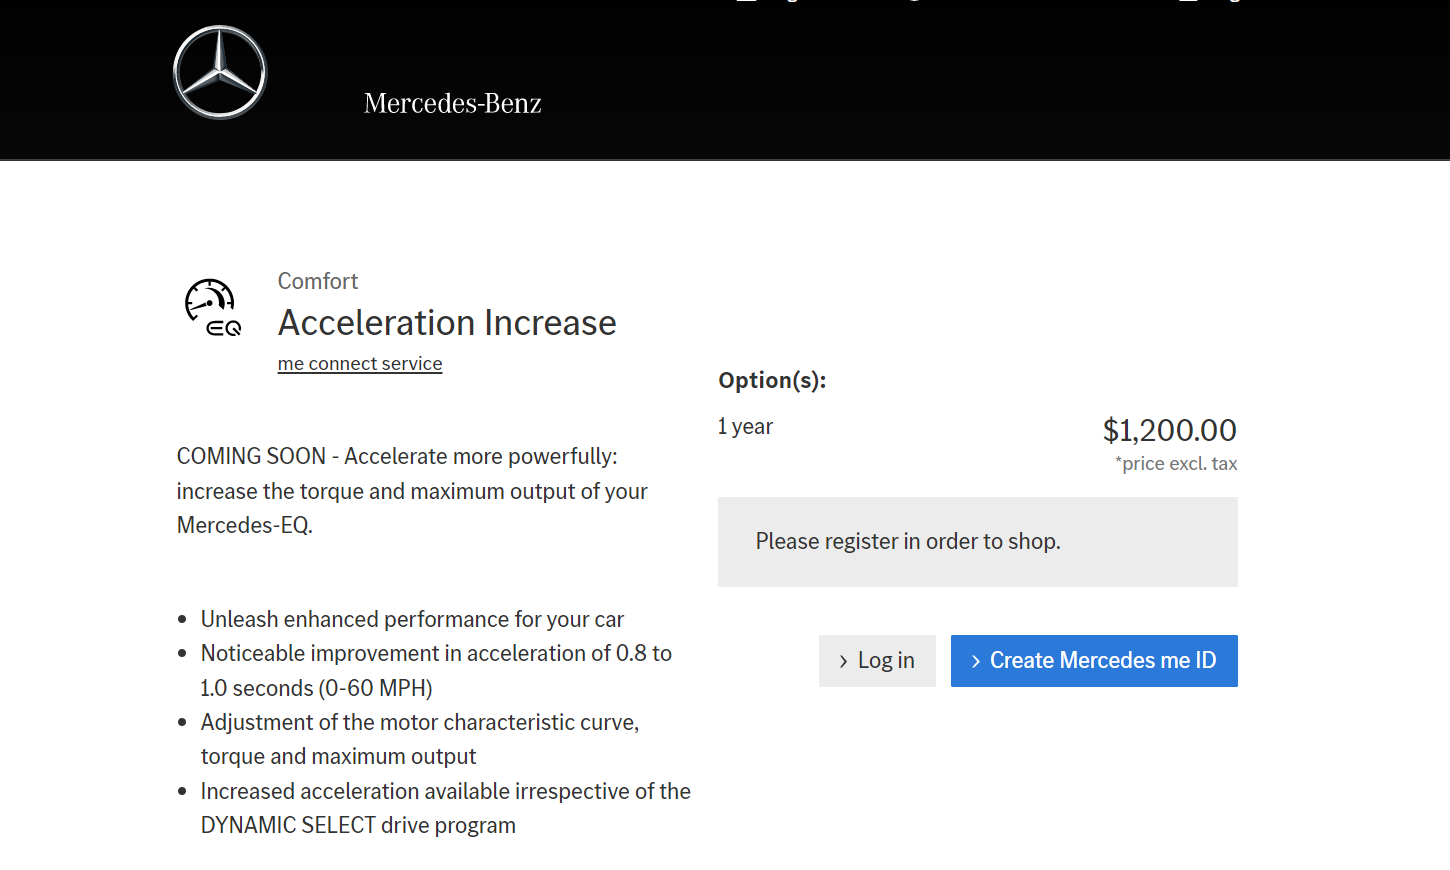 Mercedes Benz ขายแพ็กเกจปลดล็อคการเร่งเครื่องให้เร็วขึ้น ราคา 1,200  ดอลลาร์ต่อปี | Blognone